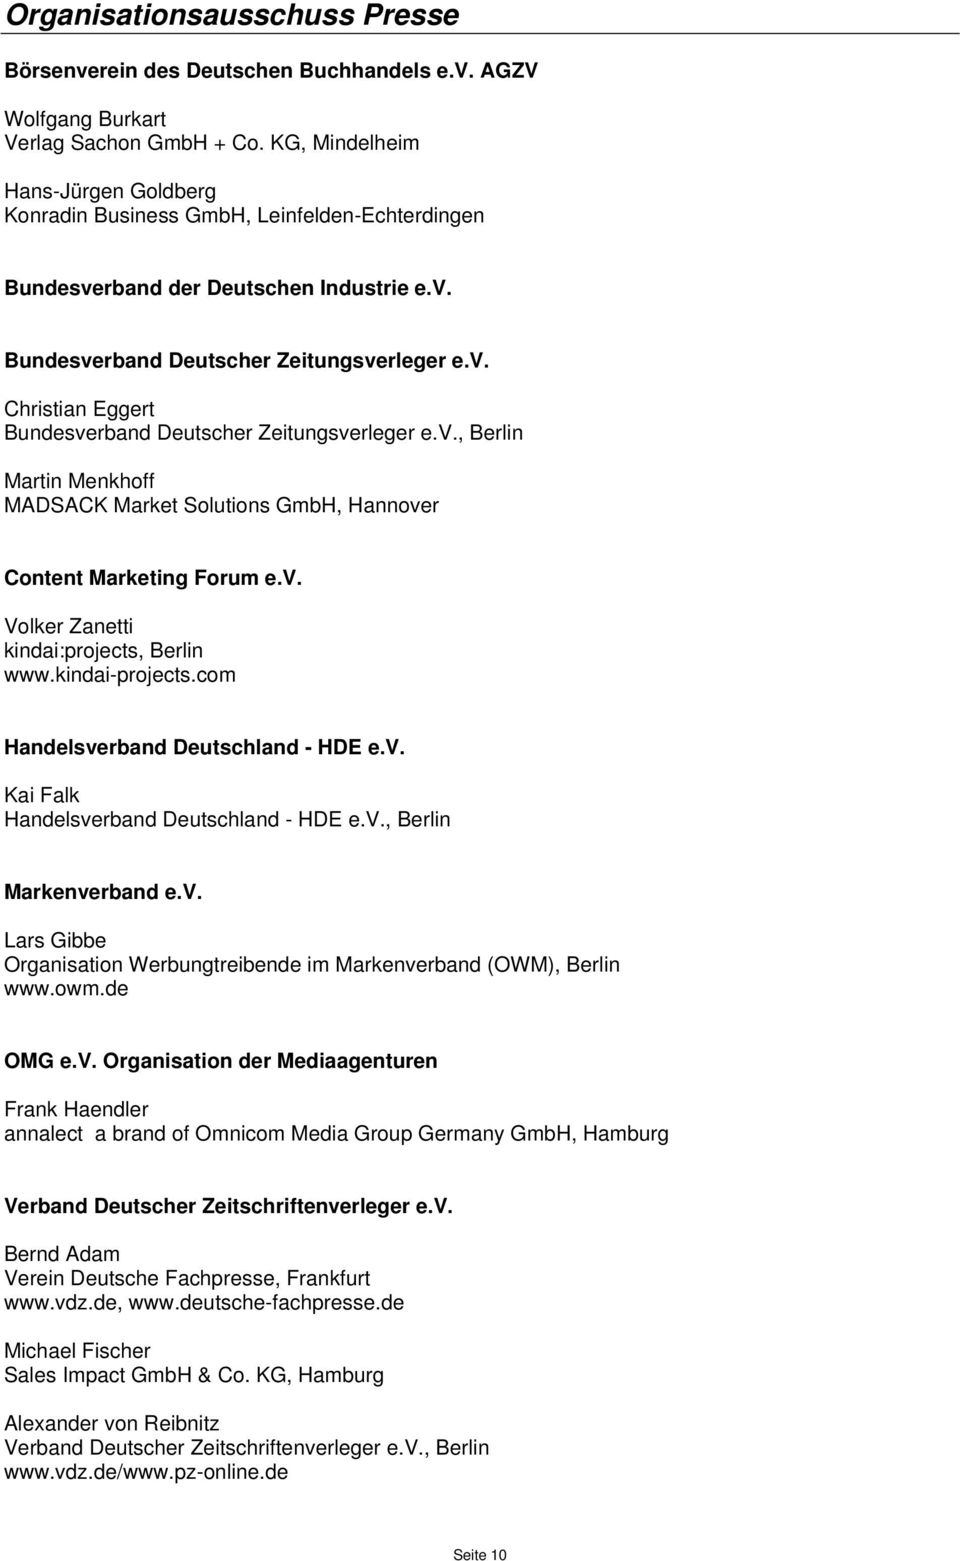 v. Volker Zanetti kindai:projects, Berlin www.kindai-projects.com Handelsverband Deutschland - HDE e.v. Kai Falk Handelsverband Deutschland - HDE e.v., Berlin Lars Gibbe Organisation Werbungtreibende im Markenverband (OWM), Berlin www.